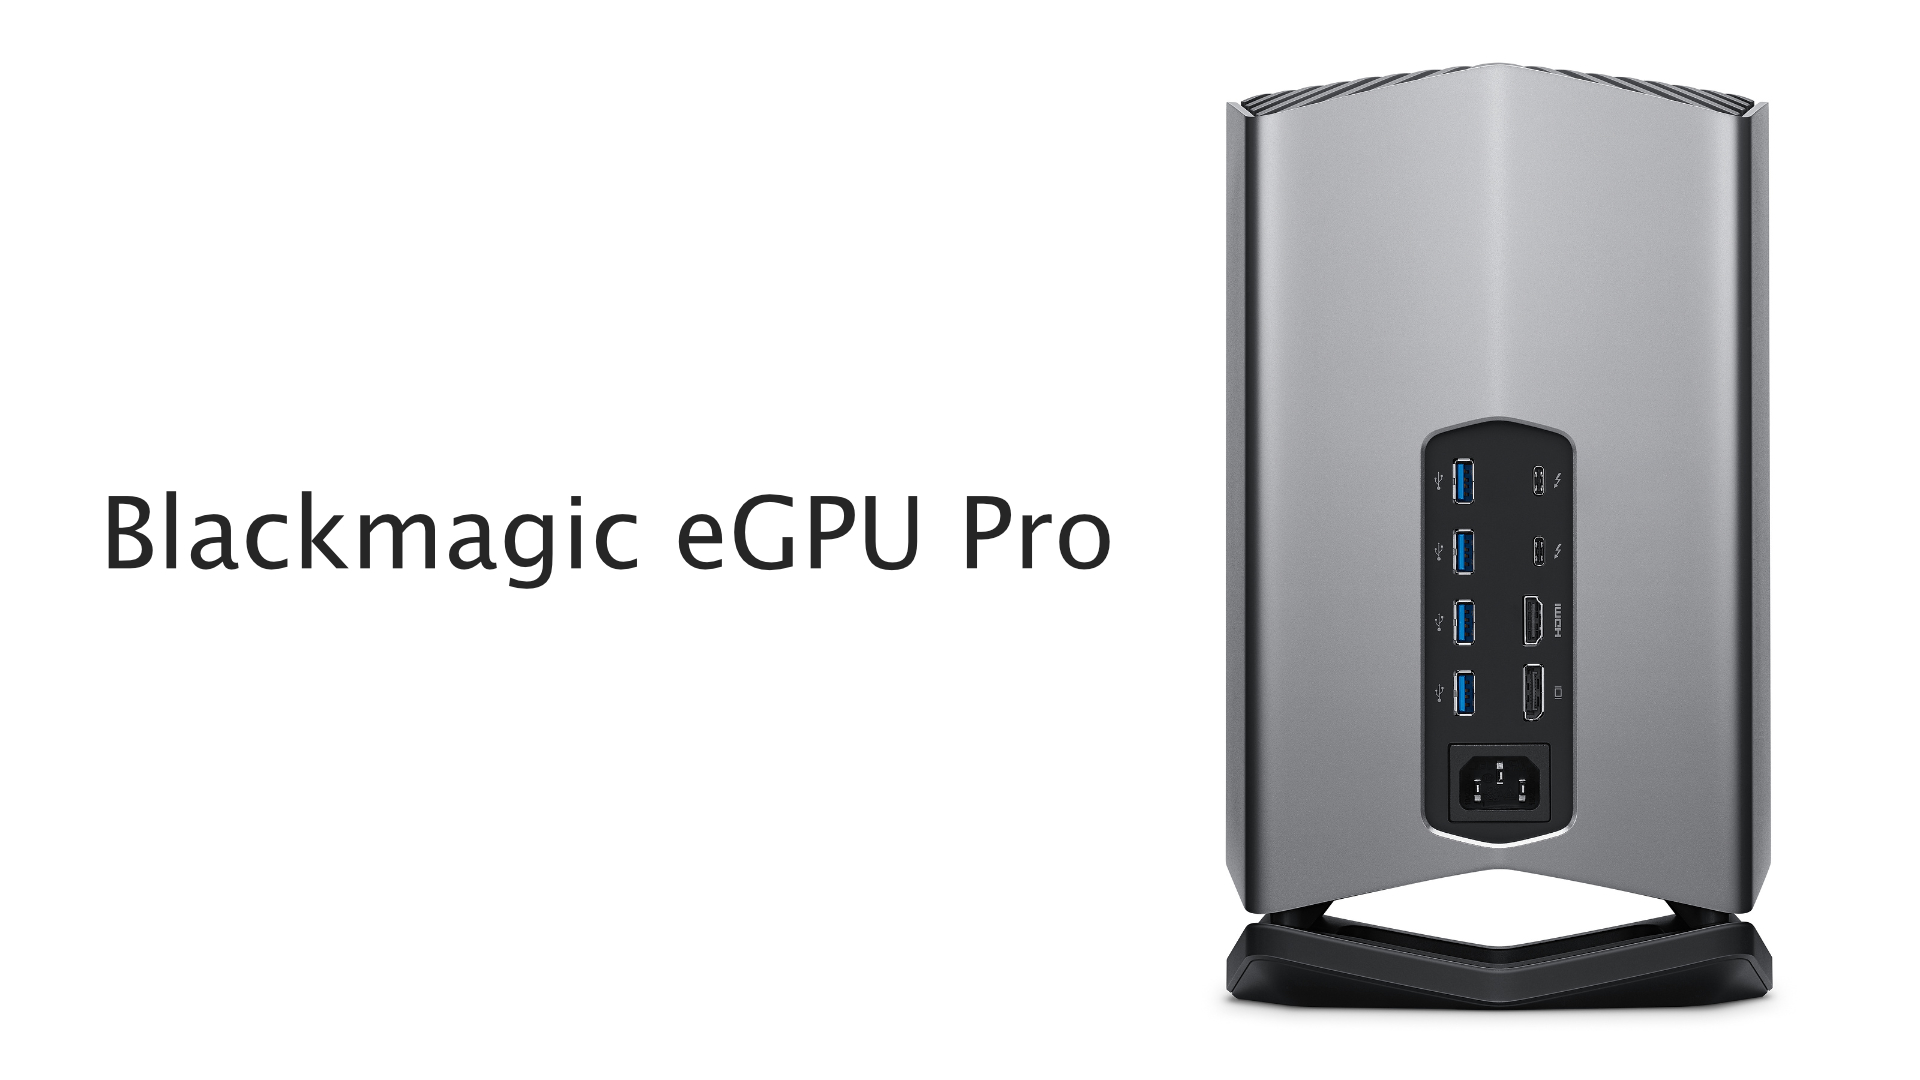 Blackmagic Design launches new eGPU Pro with Radeon RX Vega 56